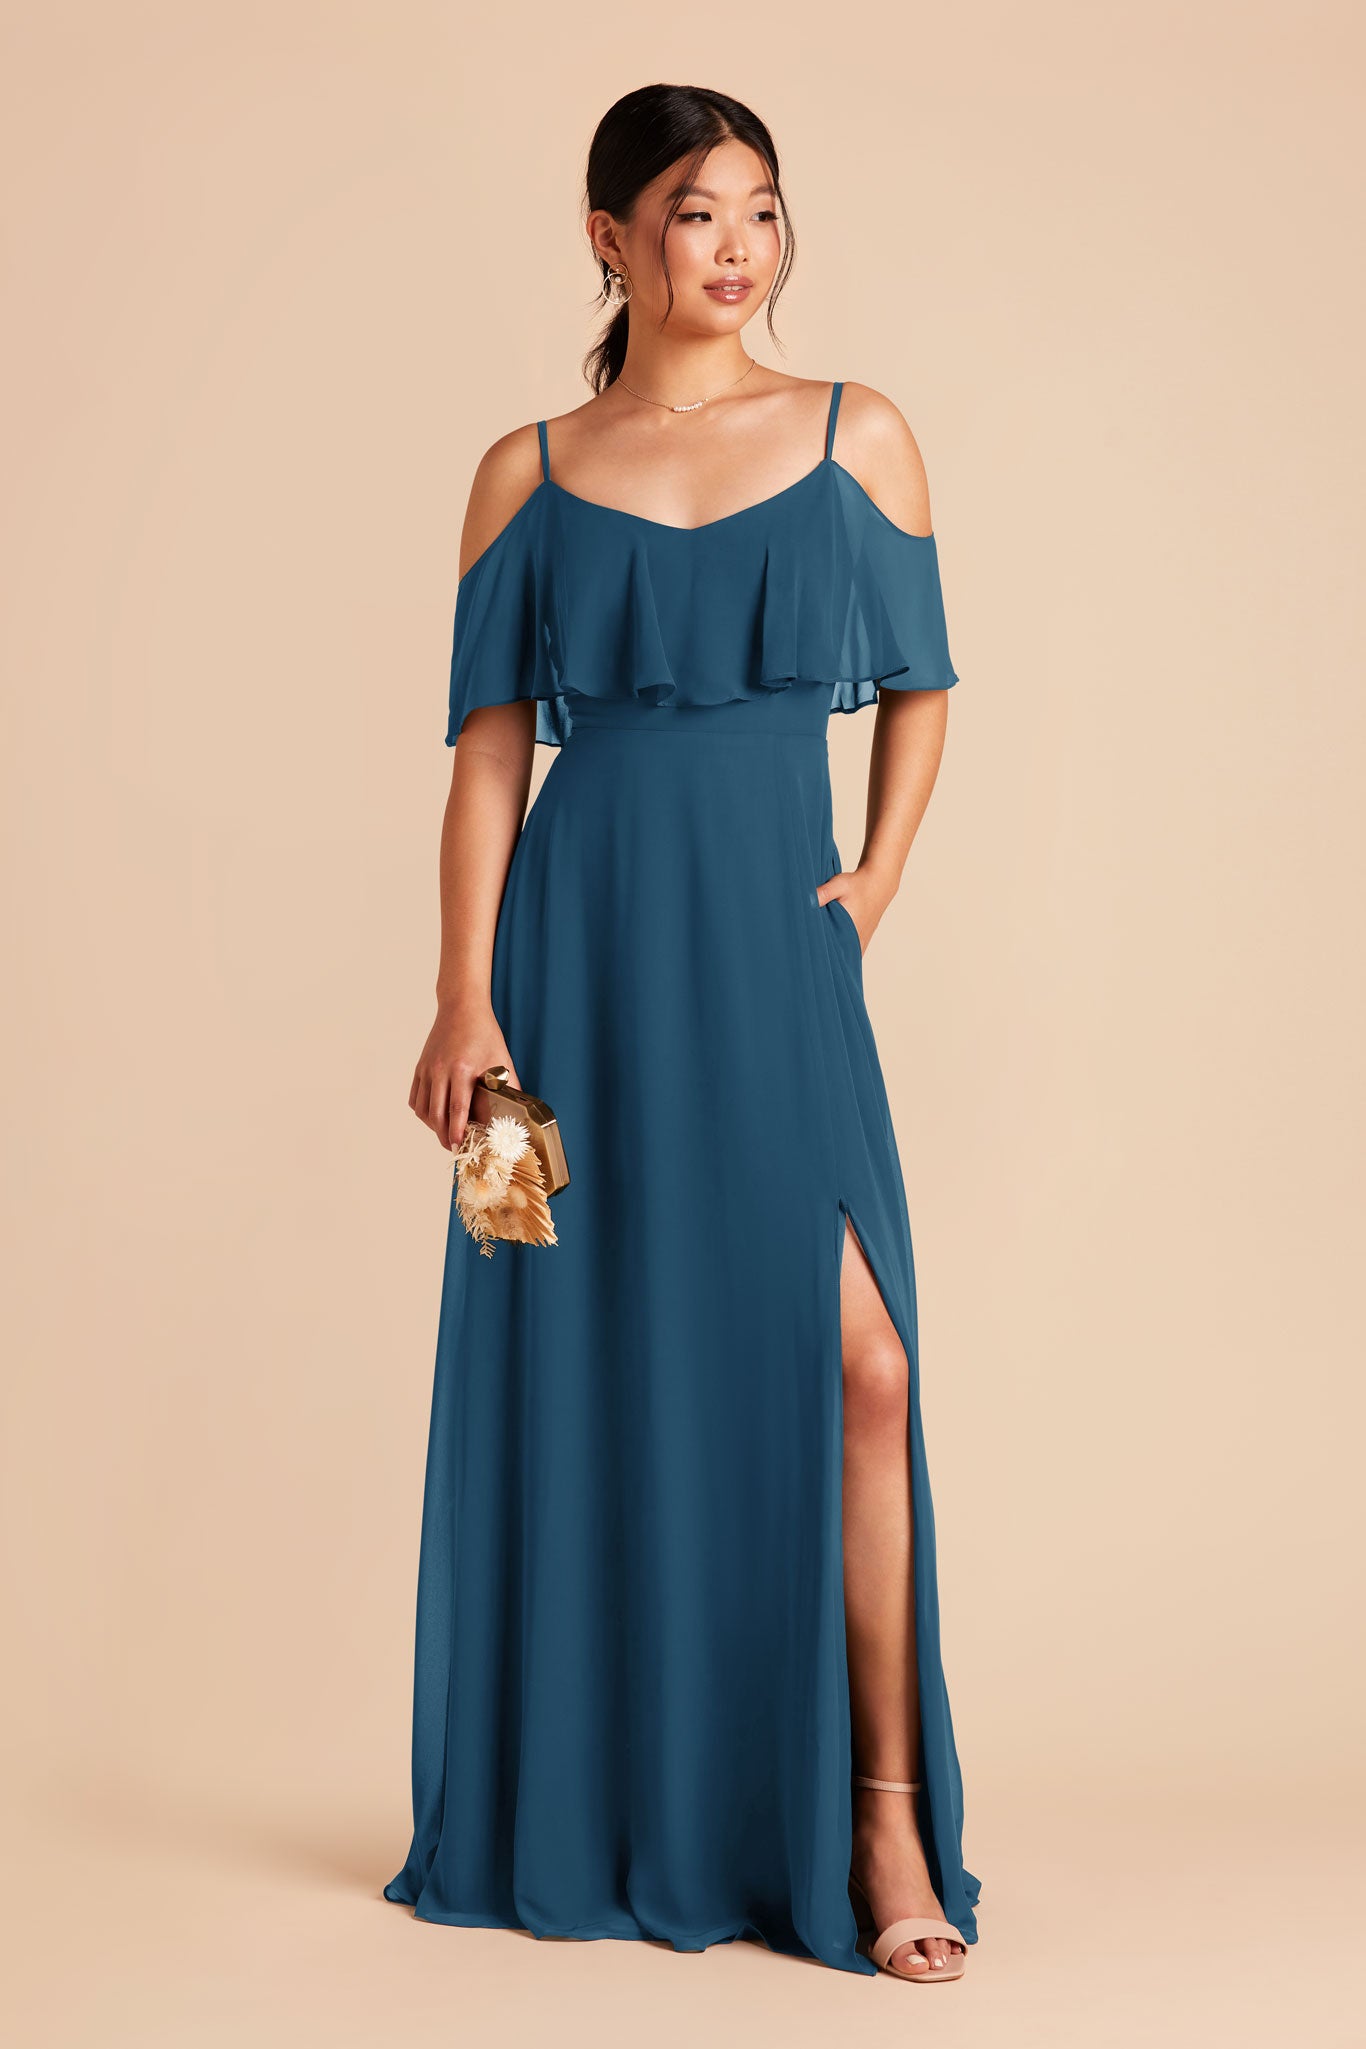 Ocean Blue Jane Convertible Dress by Birdy Grey